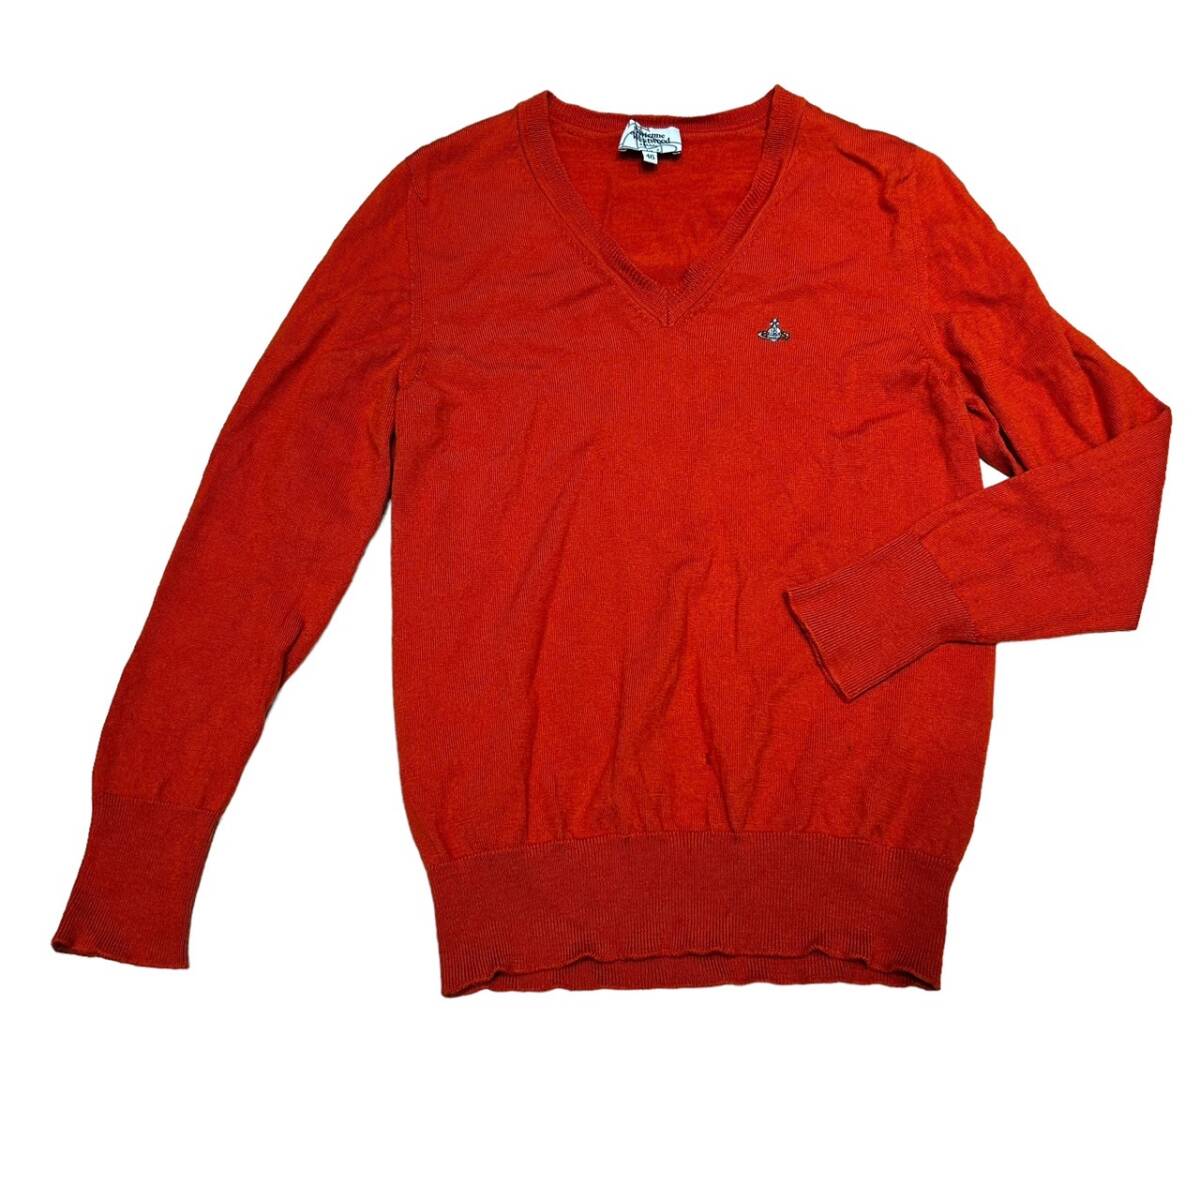 Vivienne Westwood Vivienne Westwood sweater orange knitted 46